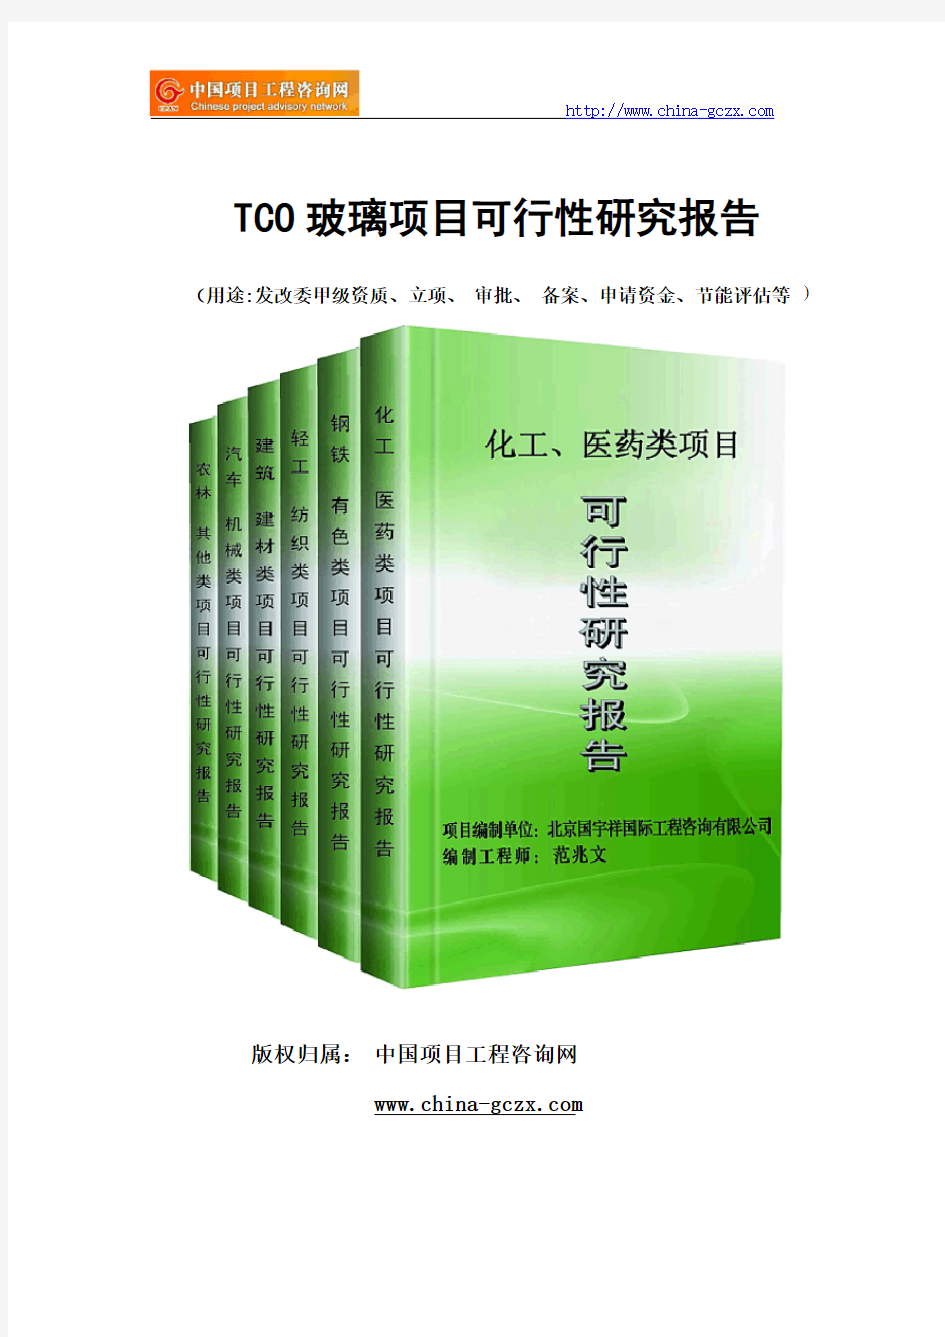 TCO玻璃项目可行性研究报告范文格式(专业经典案例)